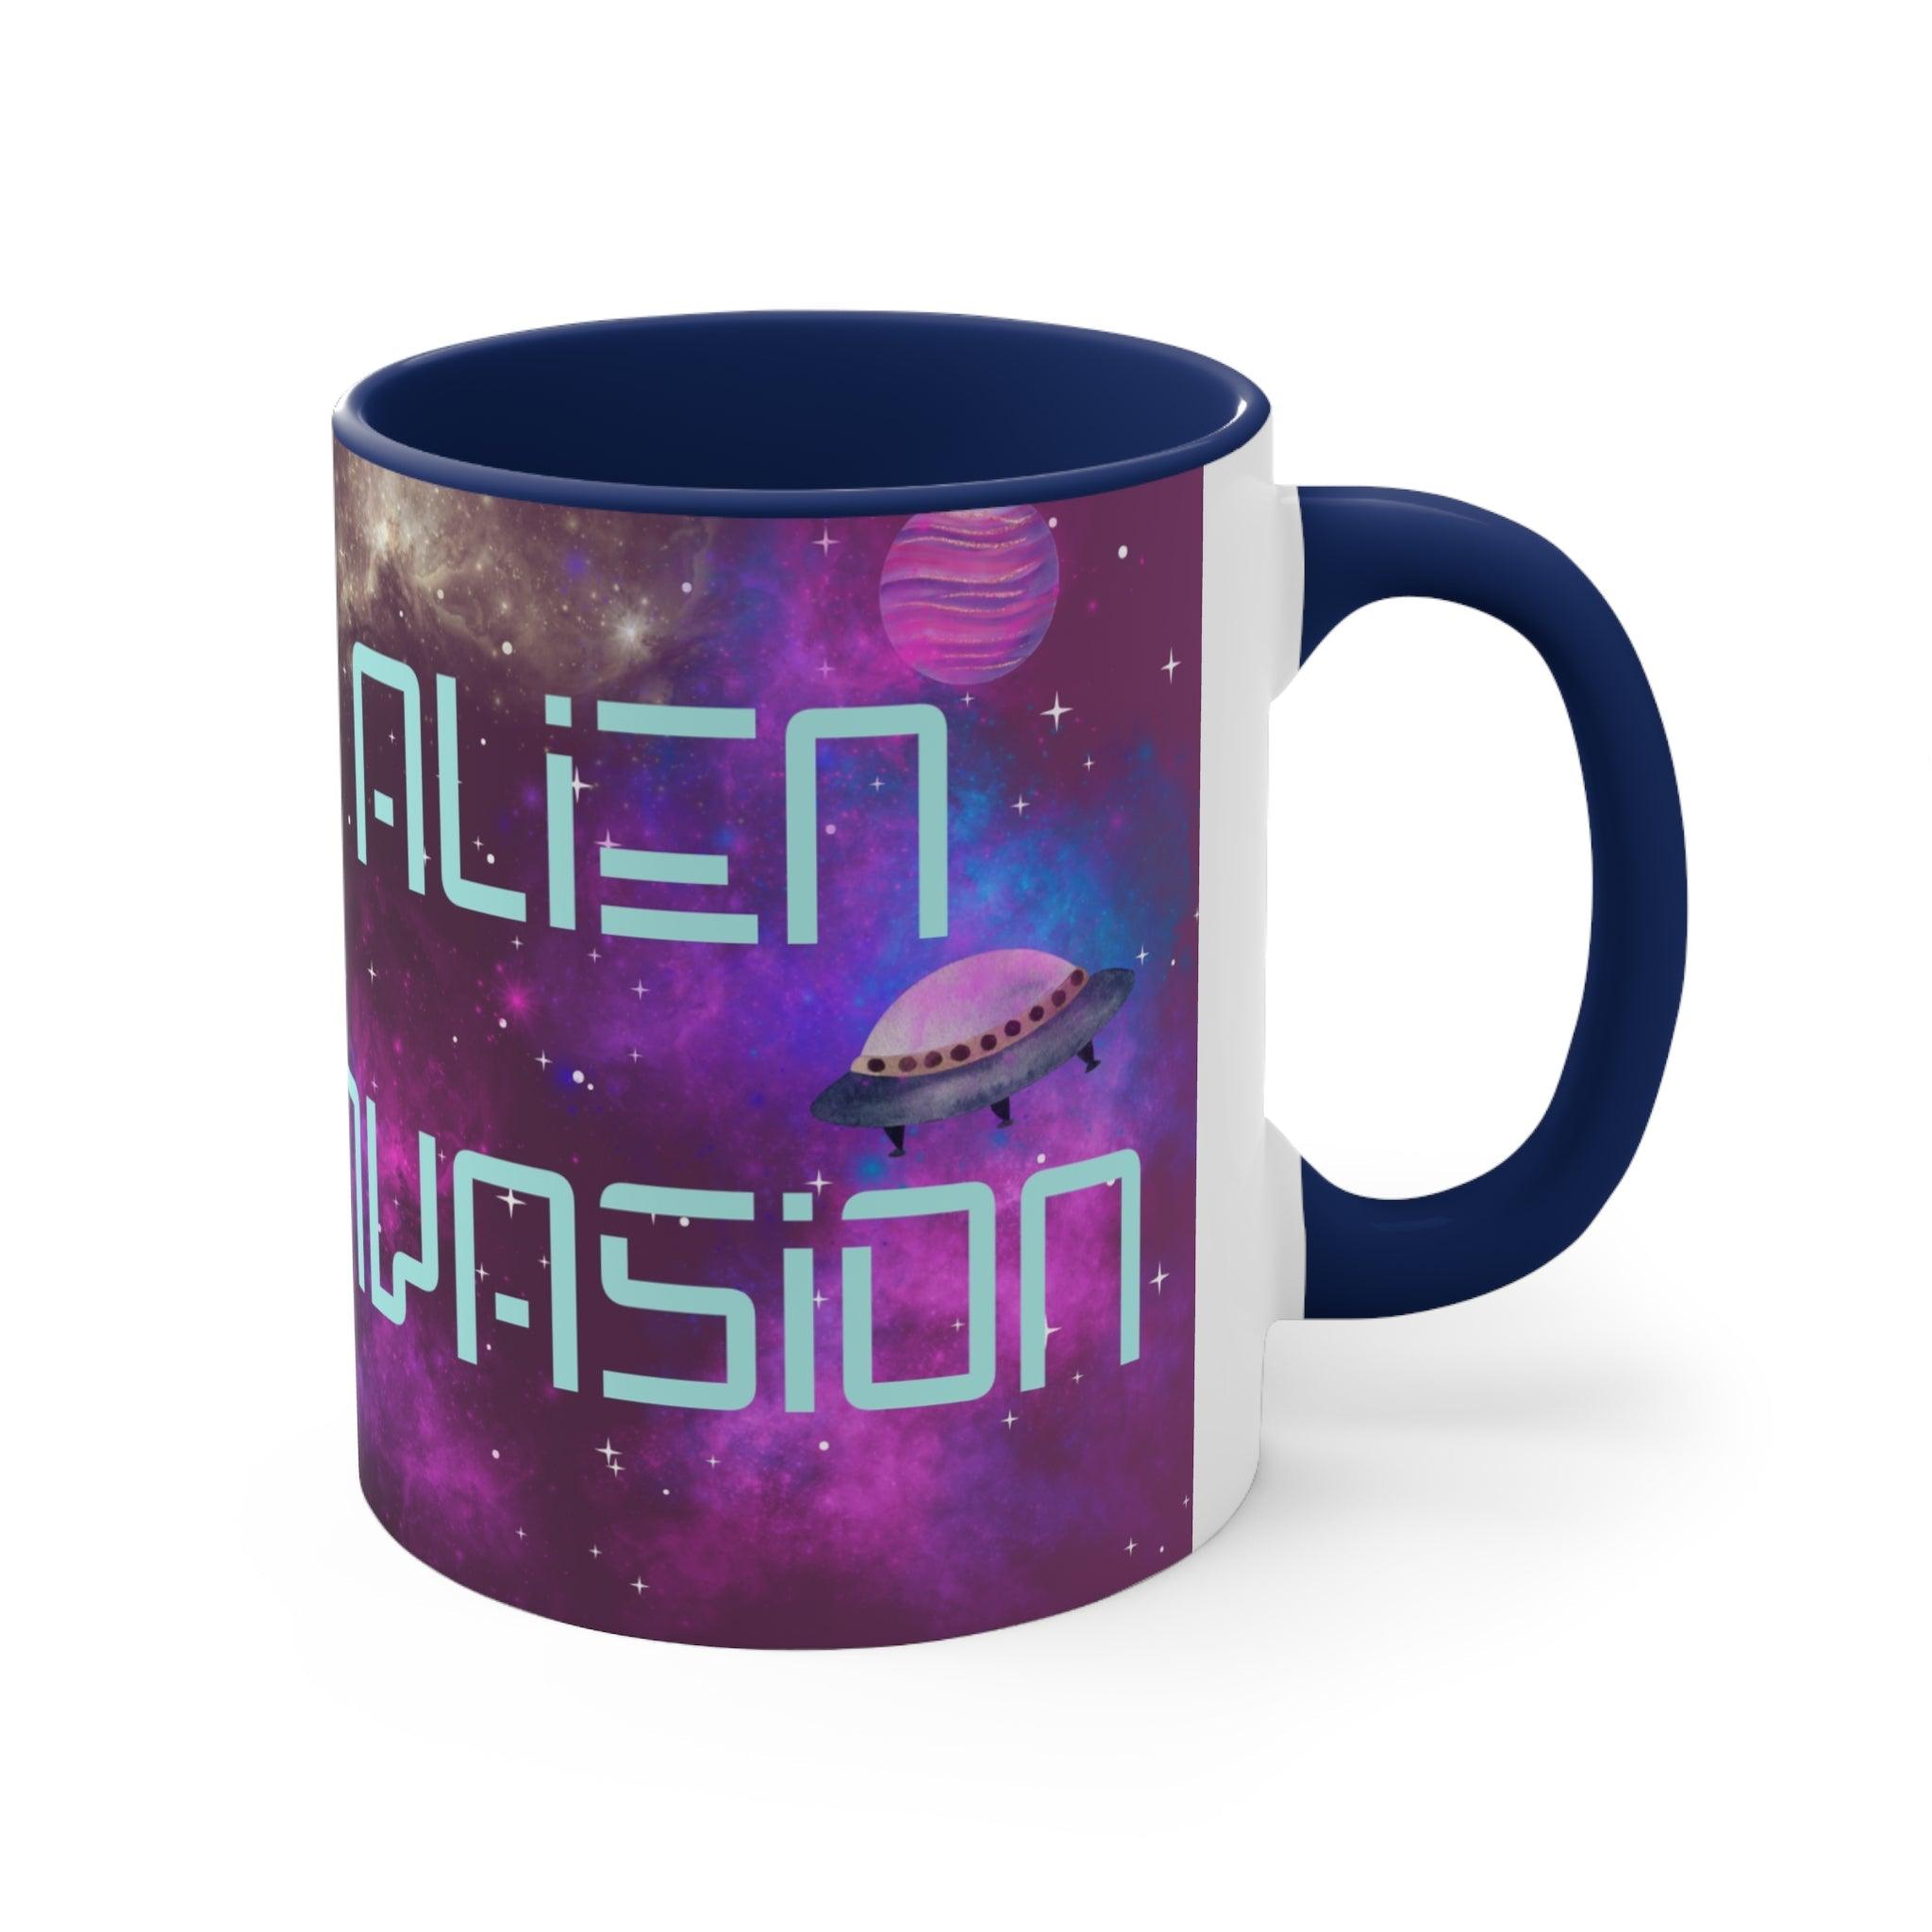 Mug "Alien Invasion" - Alien Cat - Accent Coffee Mug, 11oz - Soulshinecreators - 11 oz